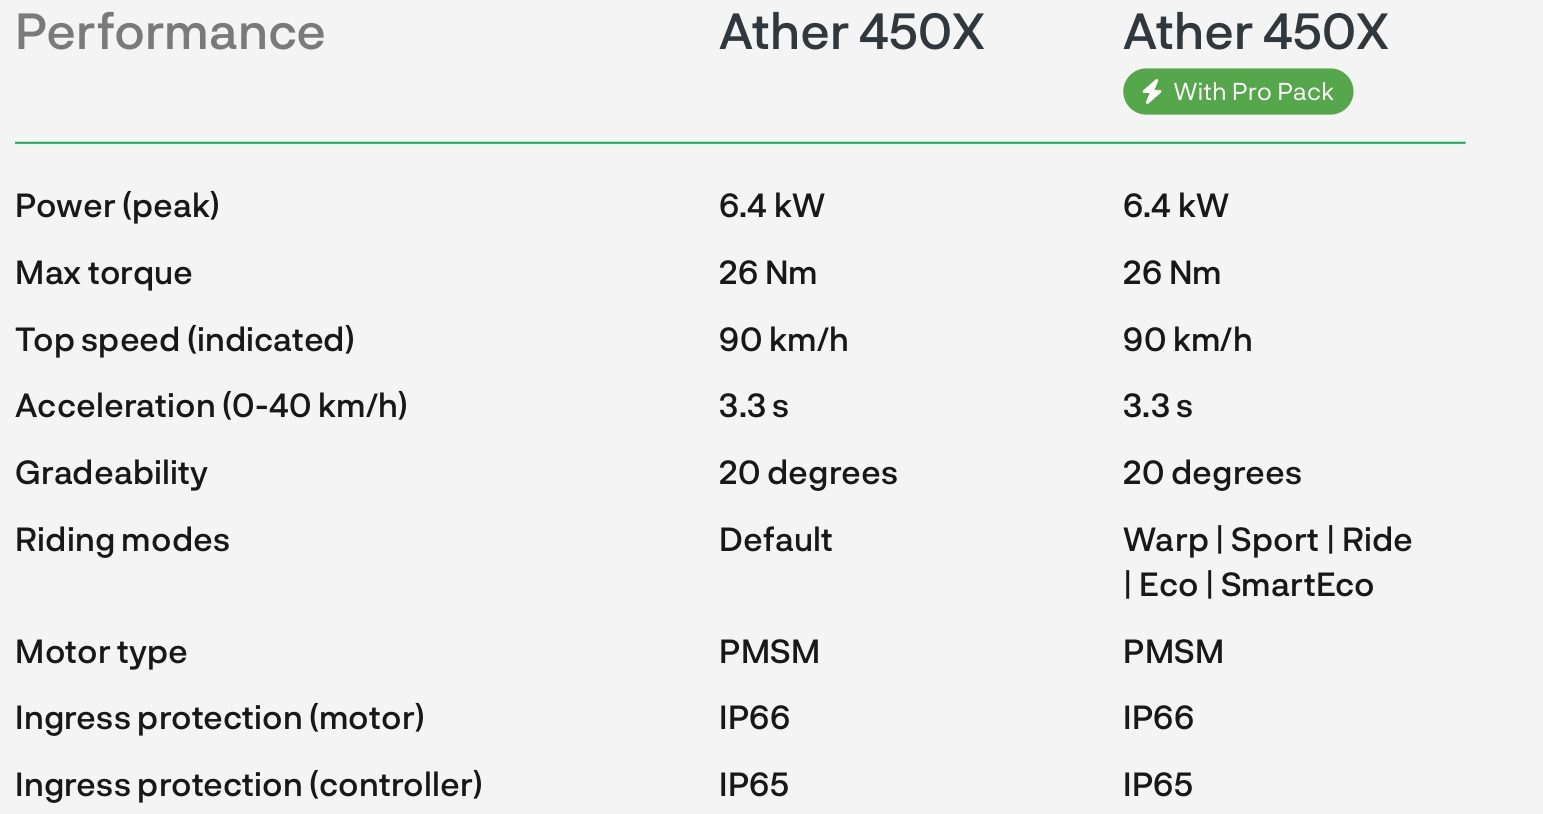 ather 450x vs 450x propack range